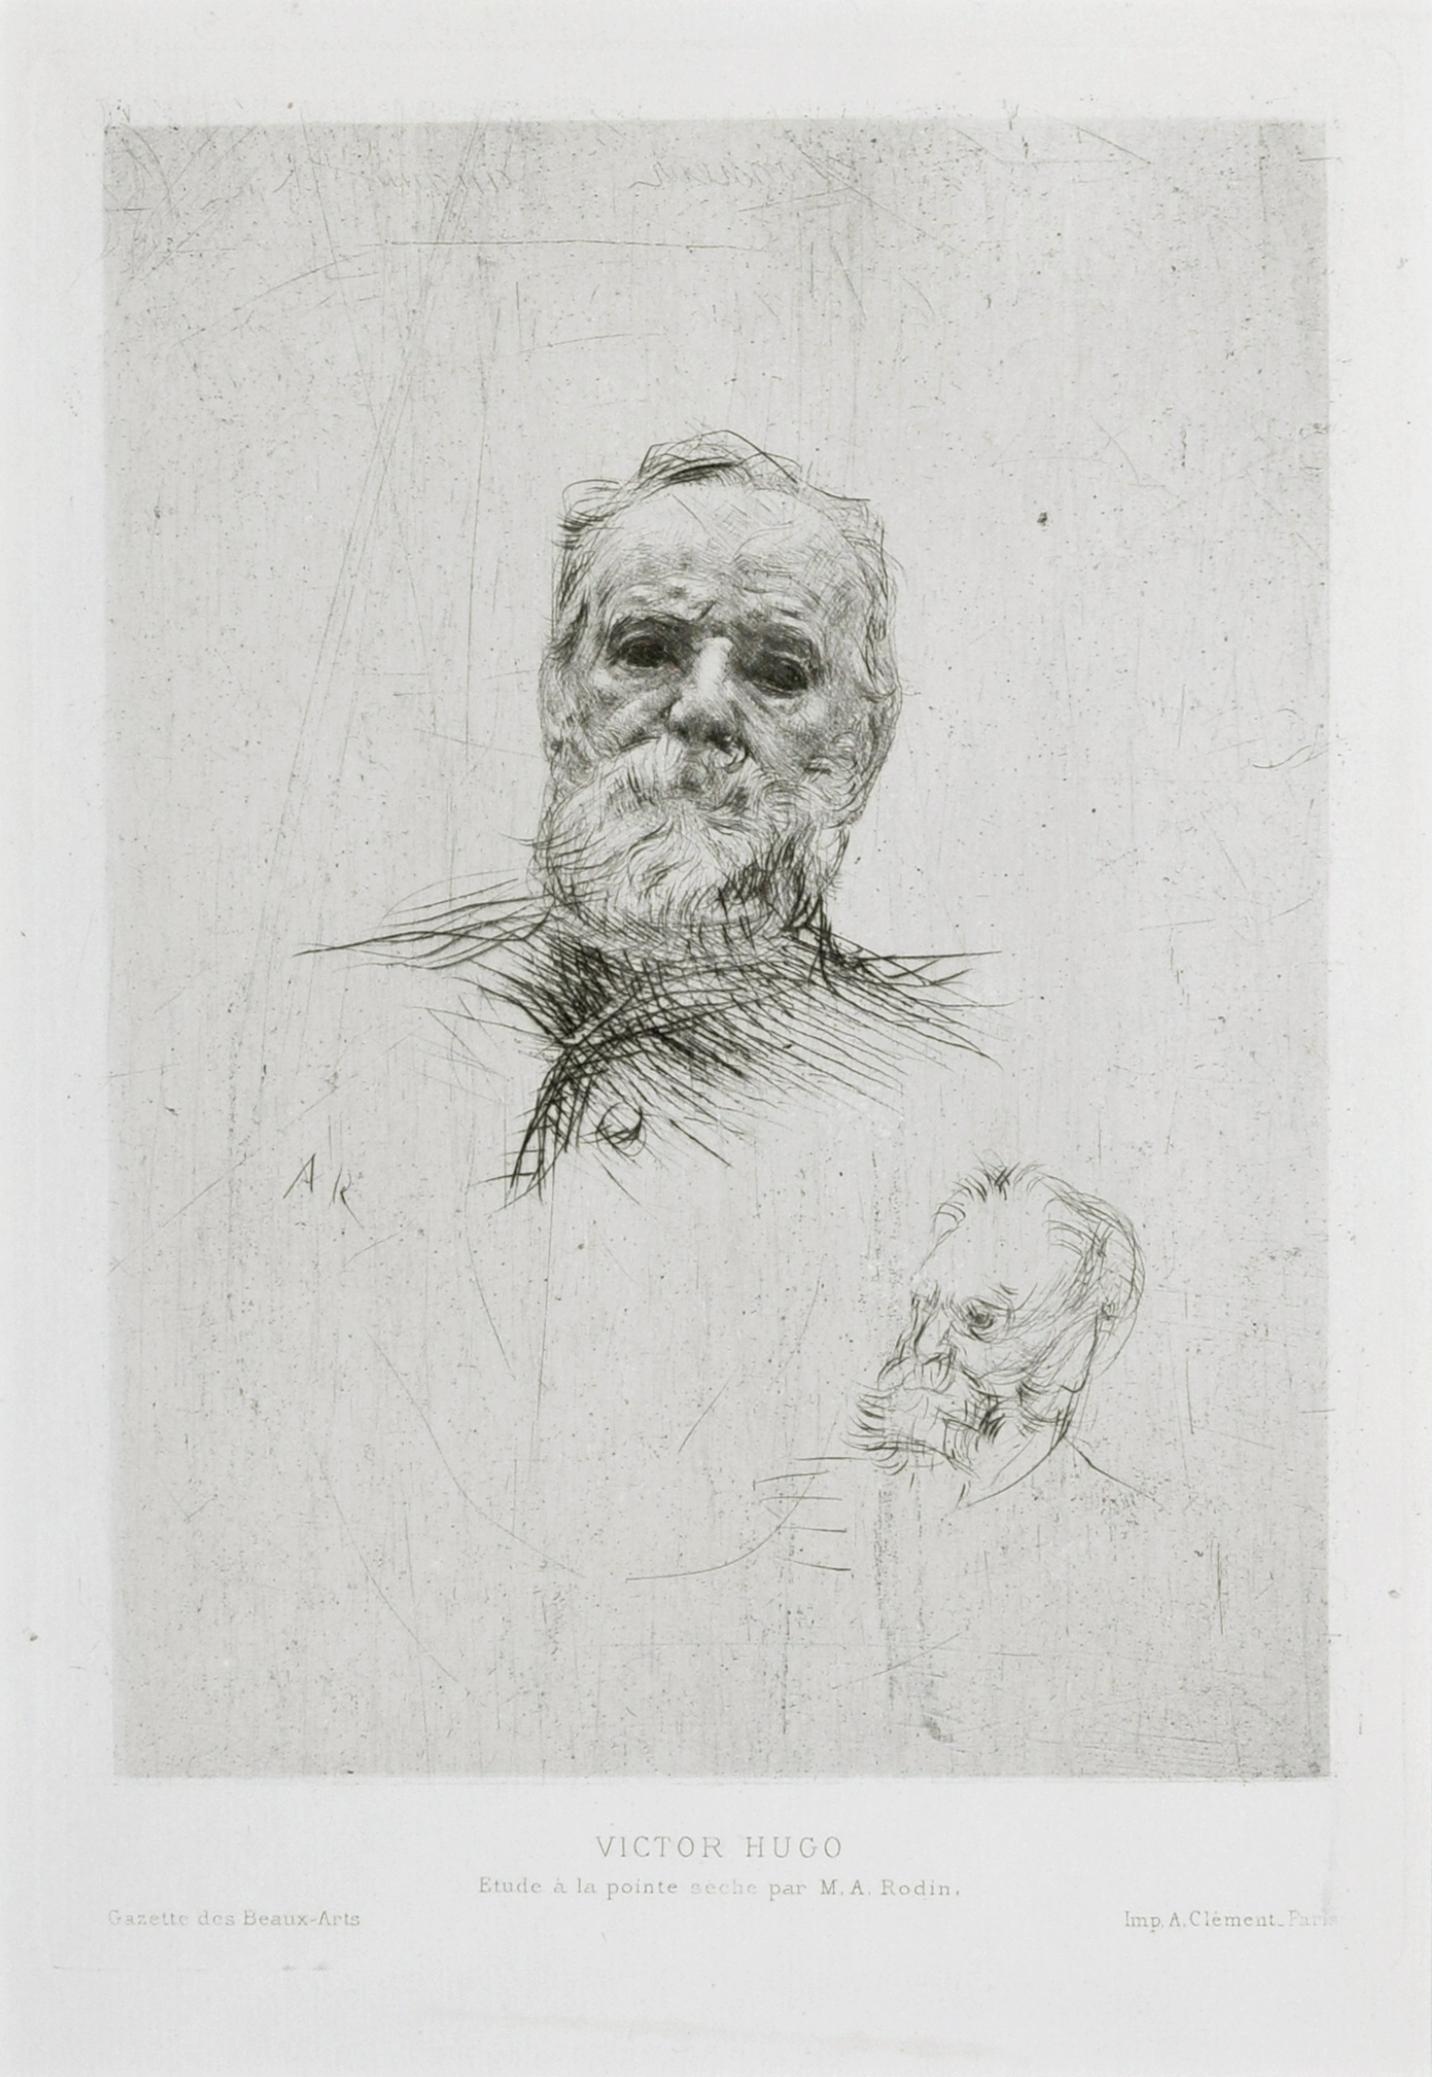 Auguste Rodin Portrait Print - Victor Hugo - Original Etching by A. Rodin - 1889